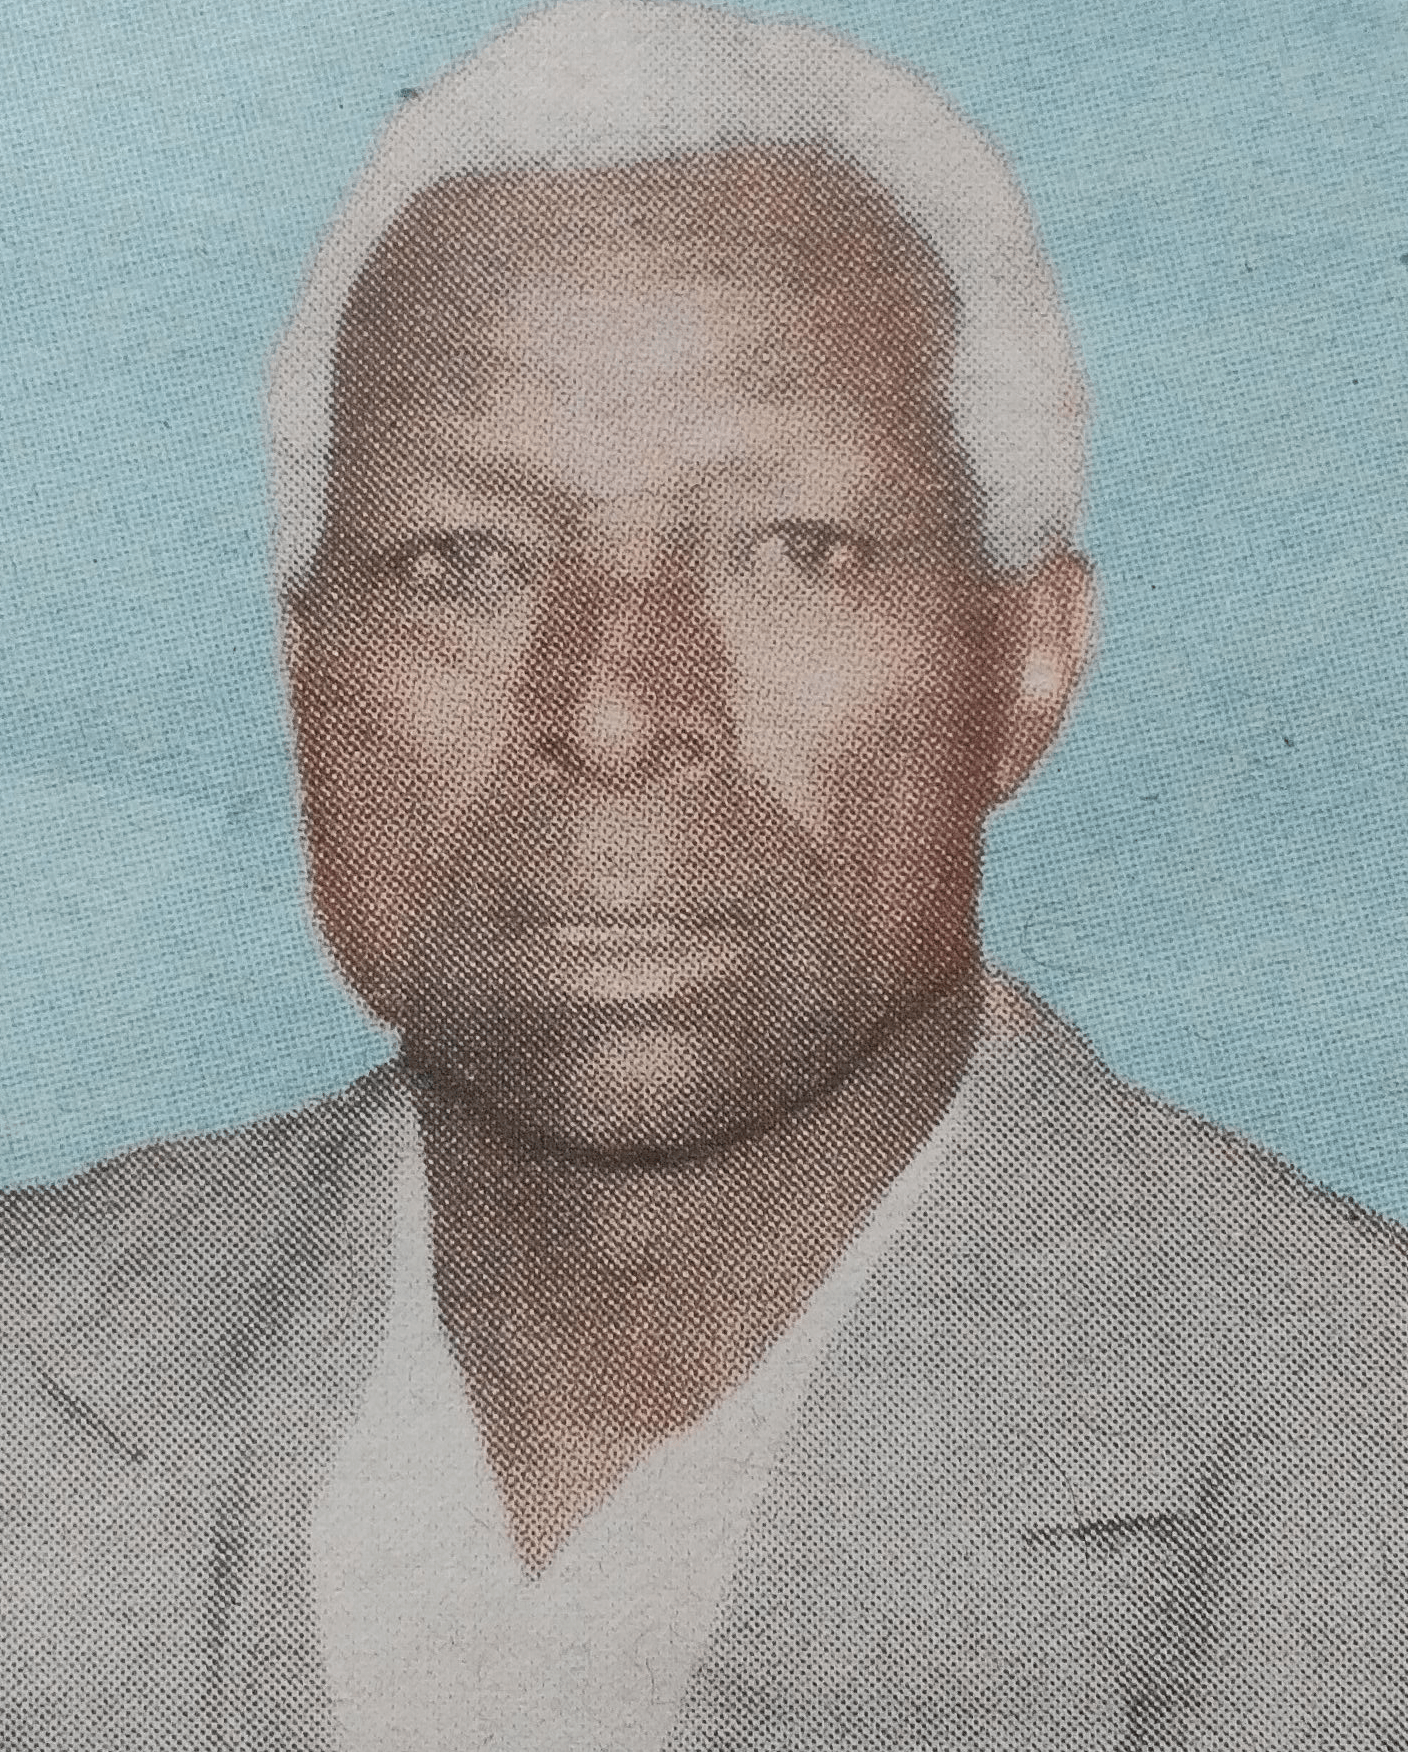 Obituary Image of John Gitonga Mugambi